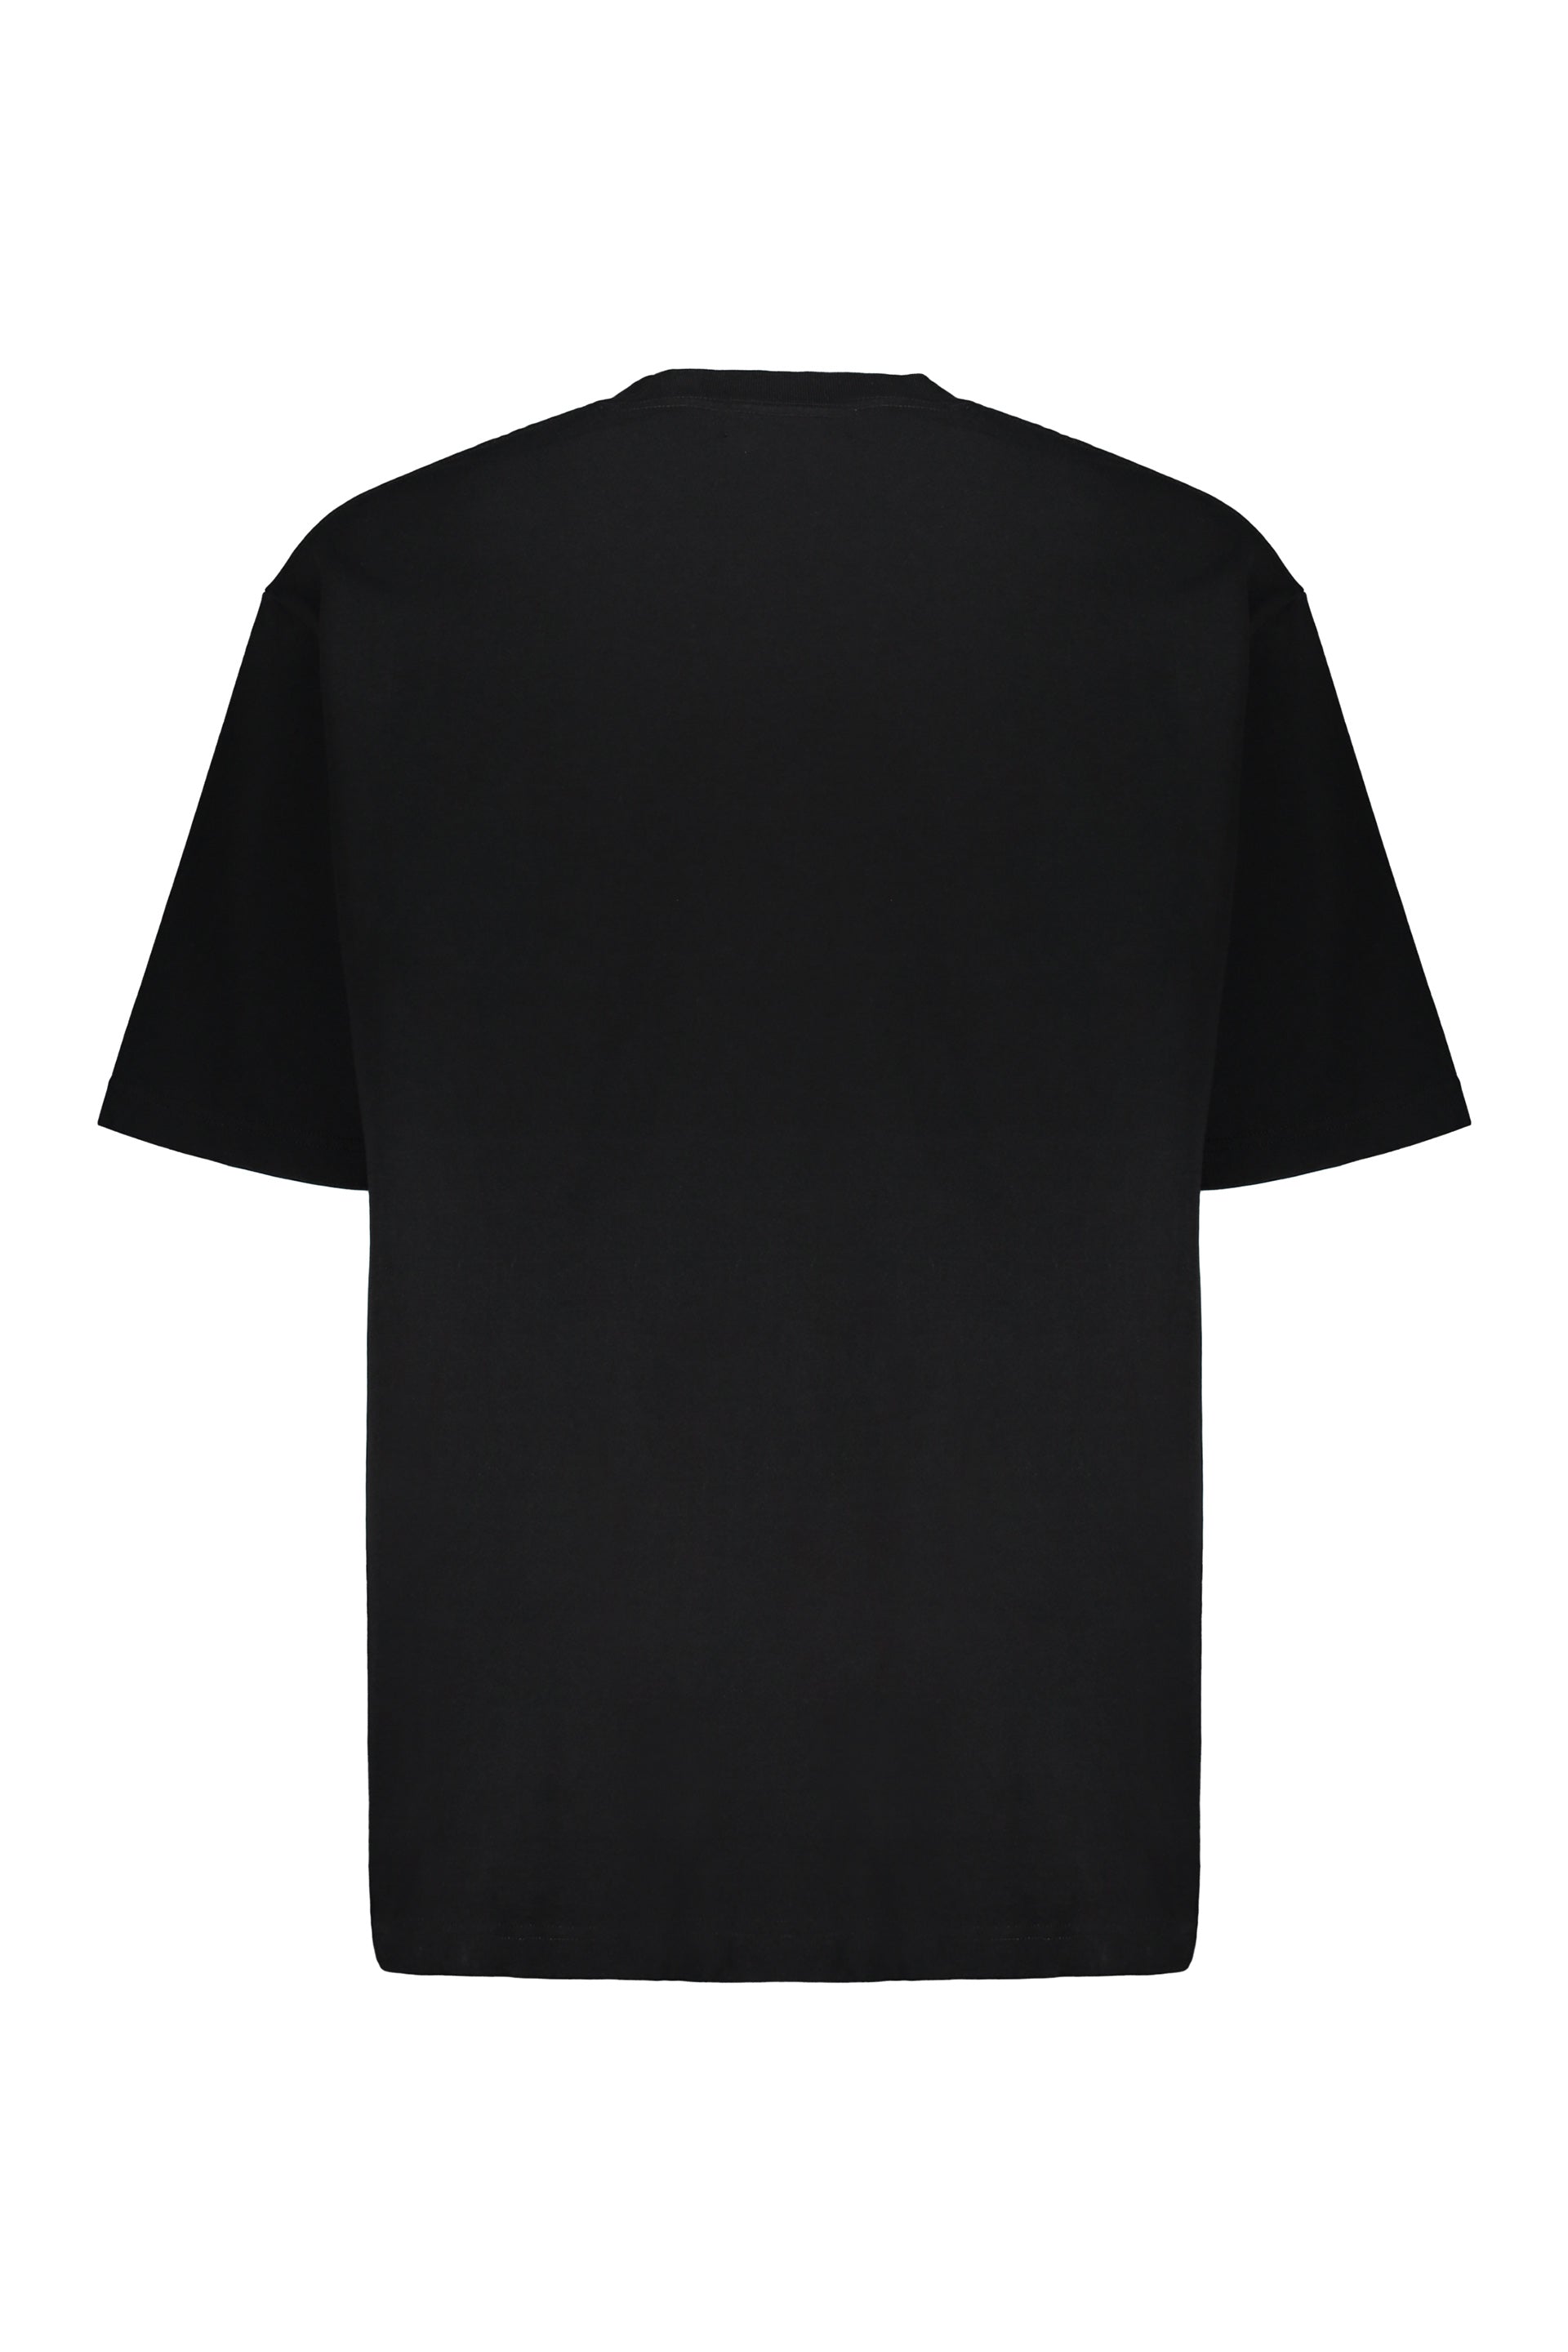 AMBUSH-OUTLET-SALE-Cotton-T-shirt-Shirts-ARCHIVE-COLLECTION-2_63576040-9e75-454e-b203-1daae2b41106.jpg